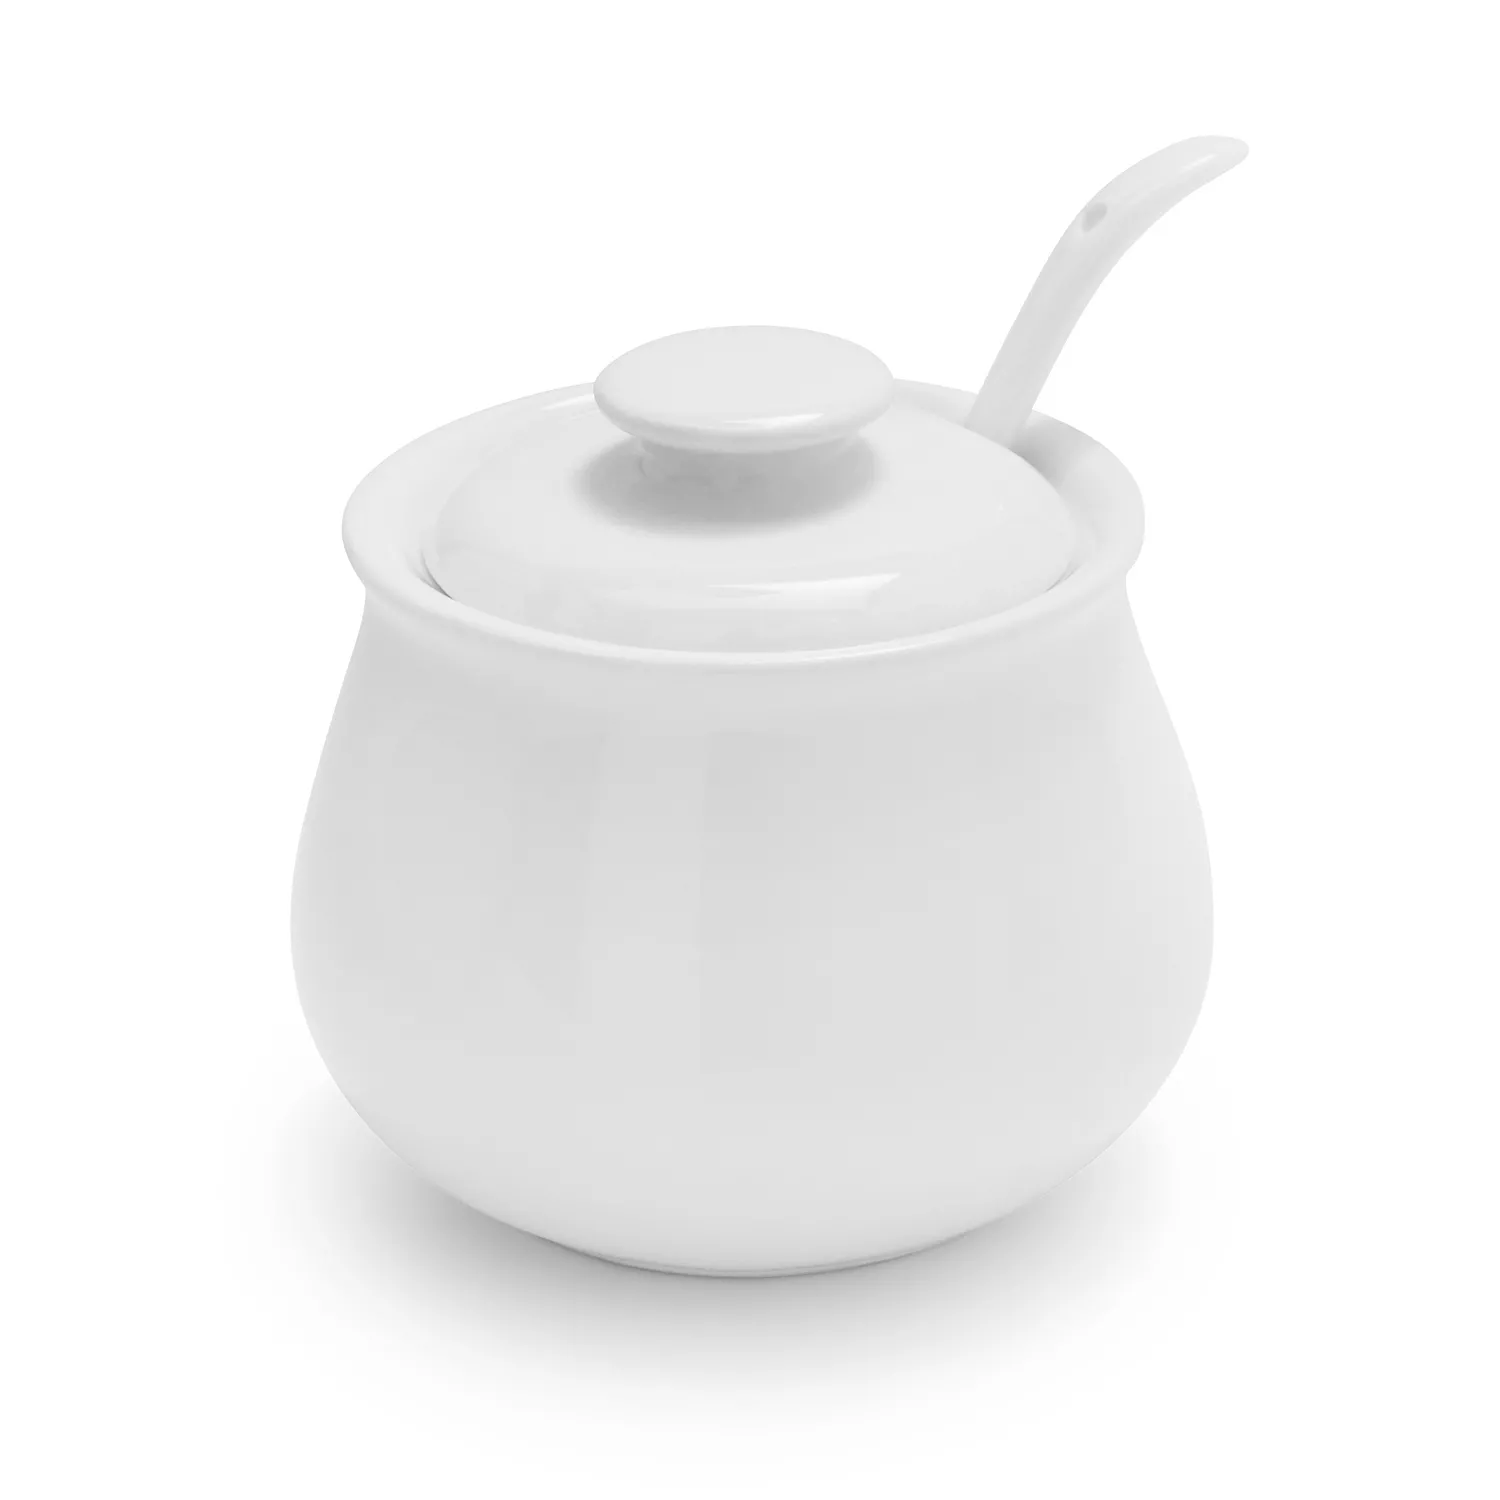 Sur La Table Porcelain Sugar Bowl with Lid and Serving Spoon HE2737-S